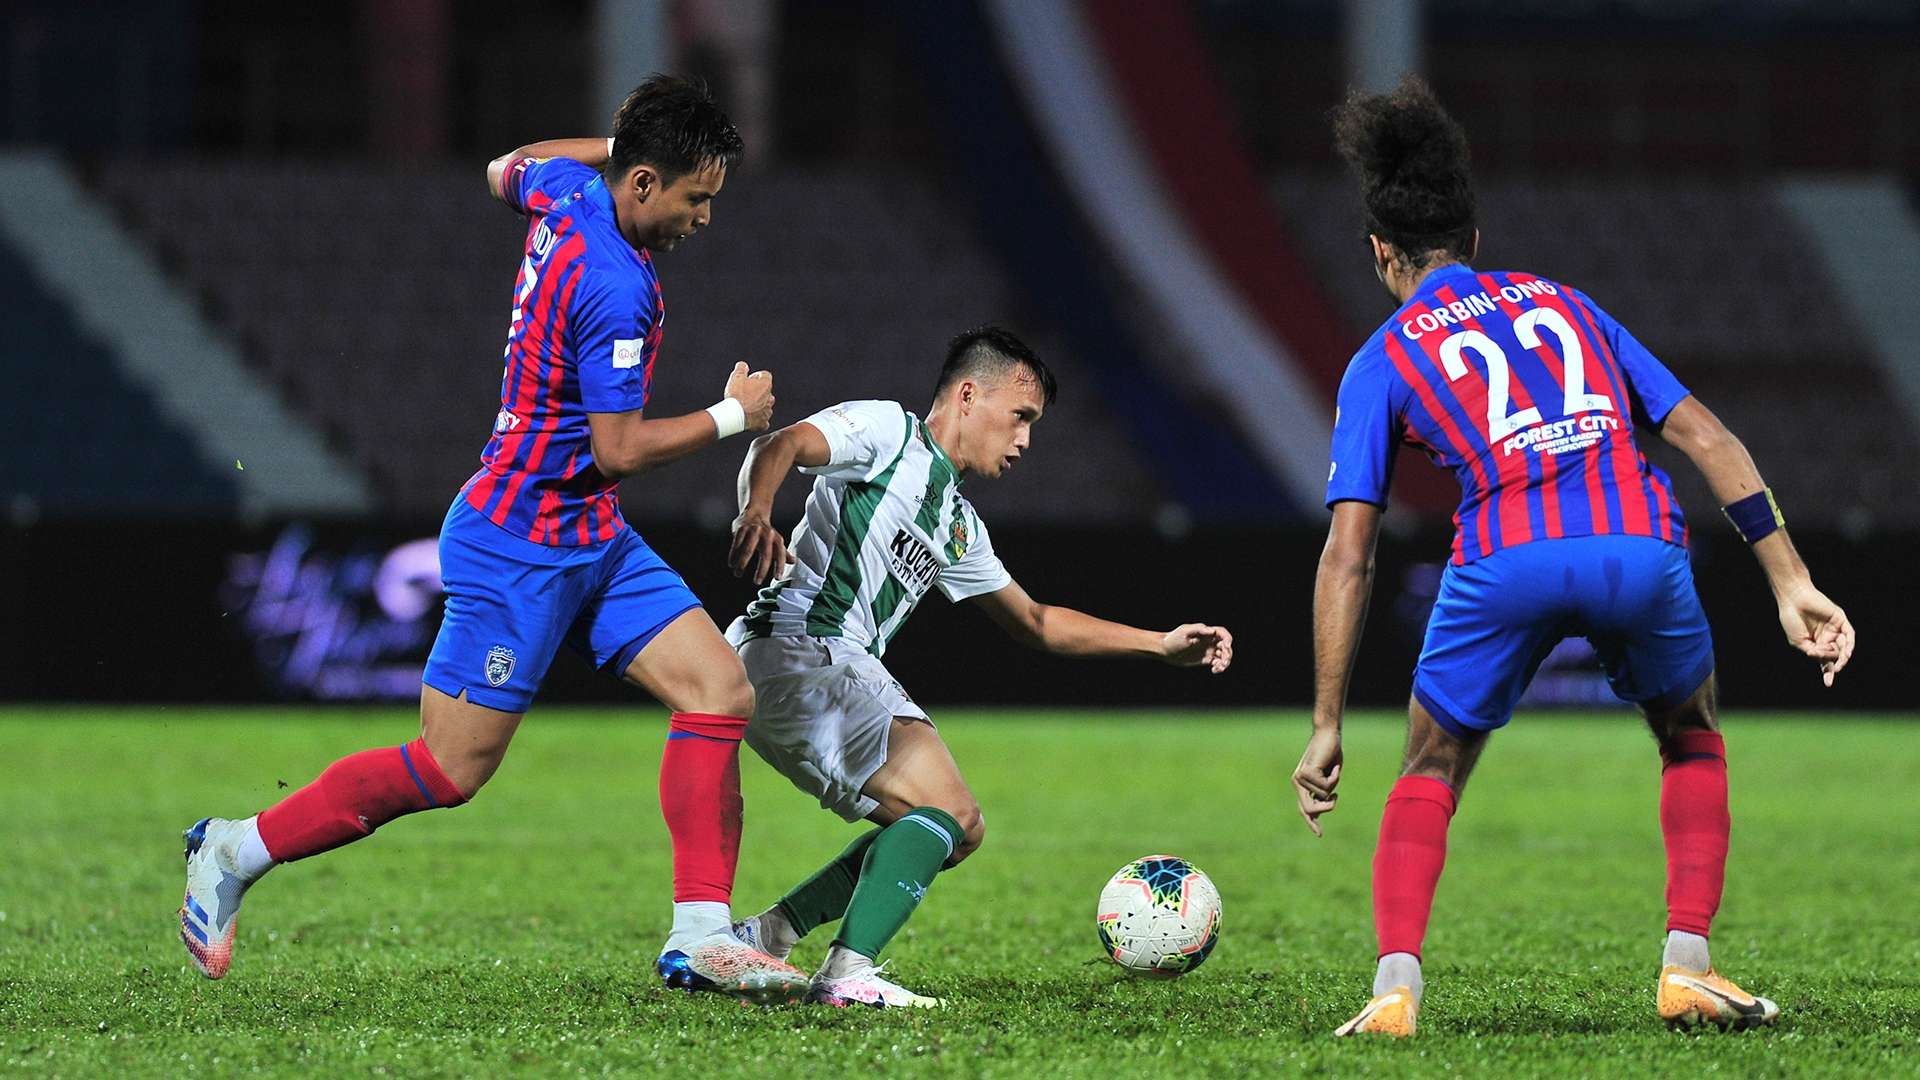 Aidil Zafuan, Johor Darul Ta'zim v Kuching FA, Malaysia Cup, 6 Nov 2020